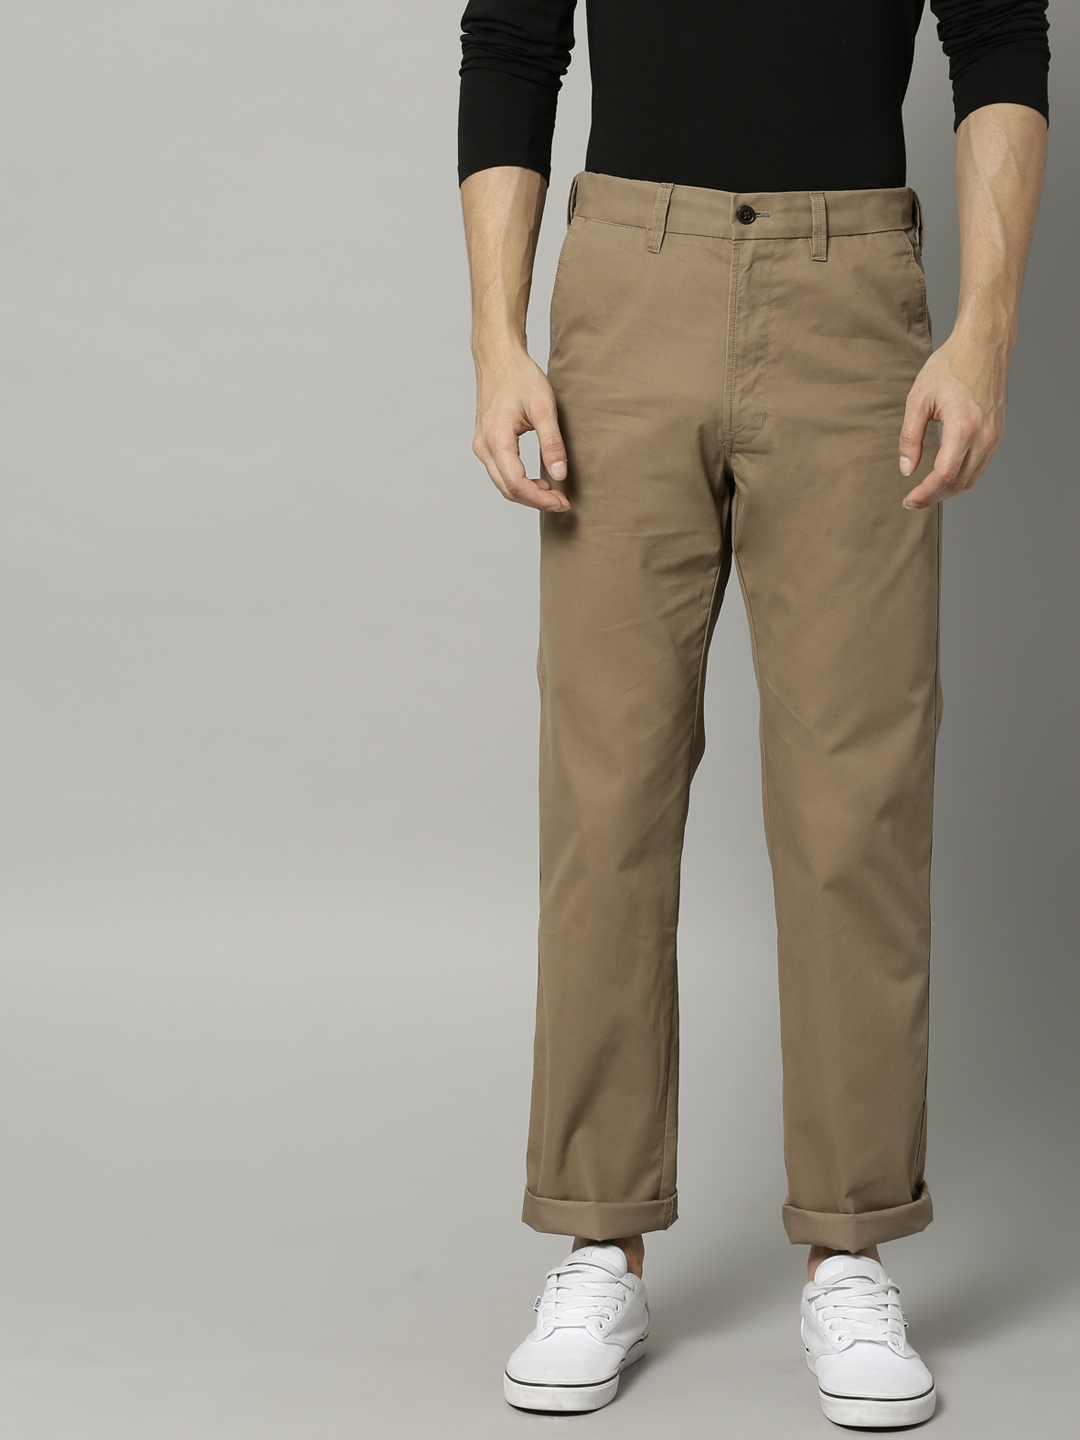 Buy Beige Trousers  Pants for Men by Marks  Spencer Online  Ajiocom